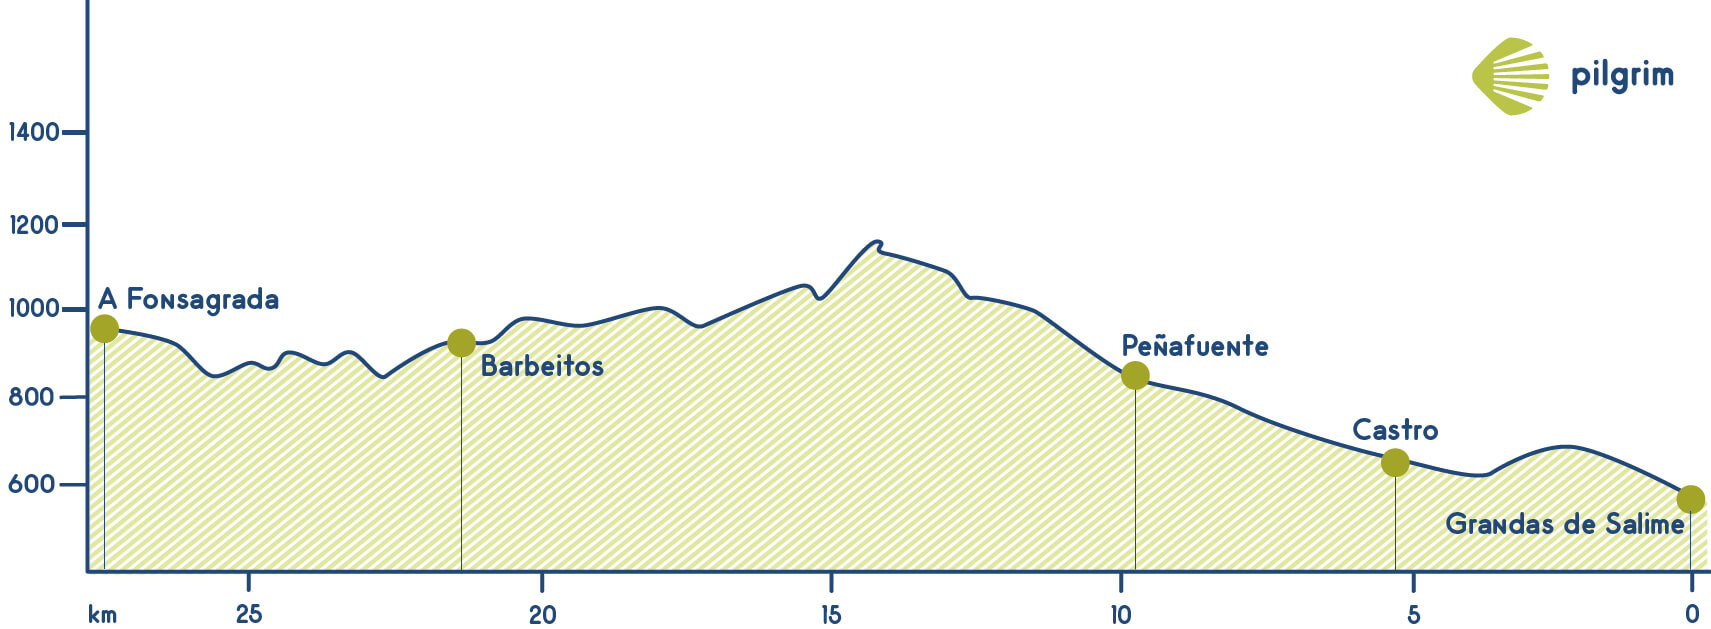 Stage 7 Camino Primitivo